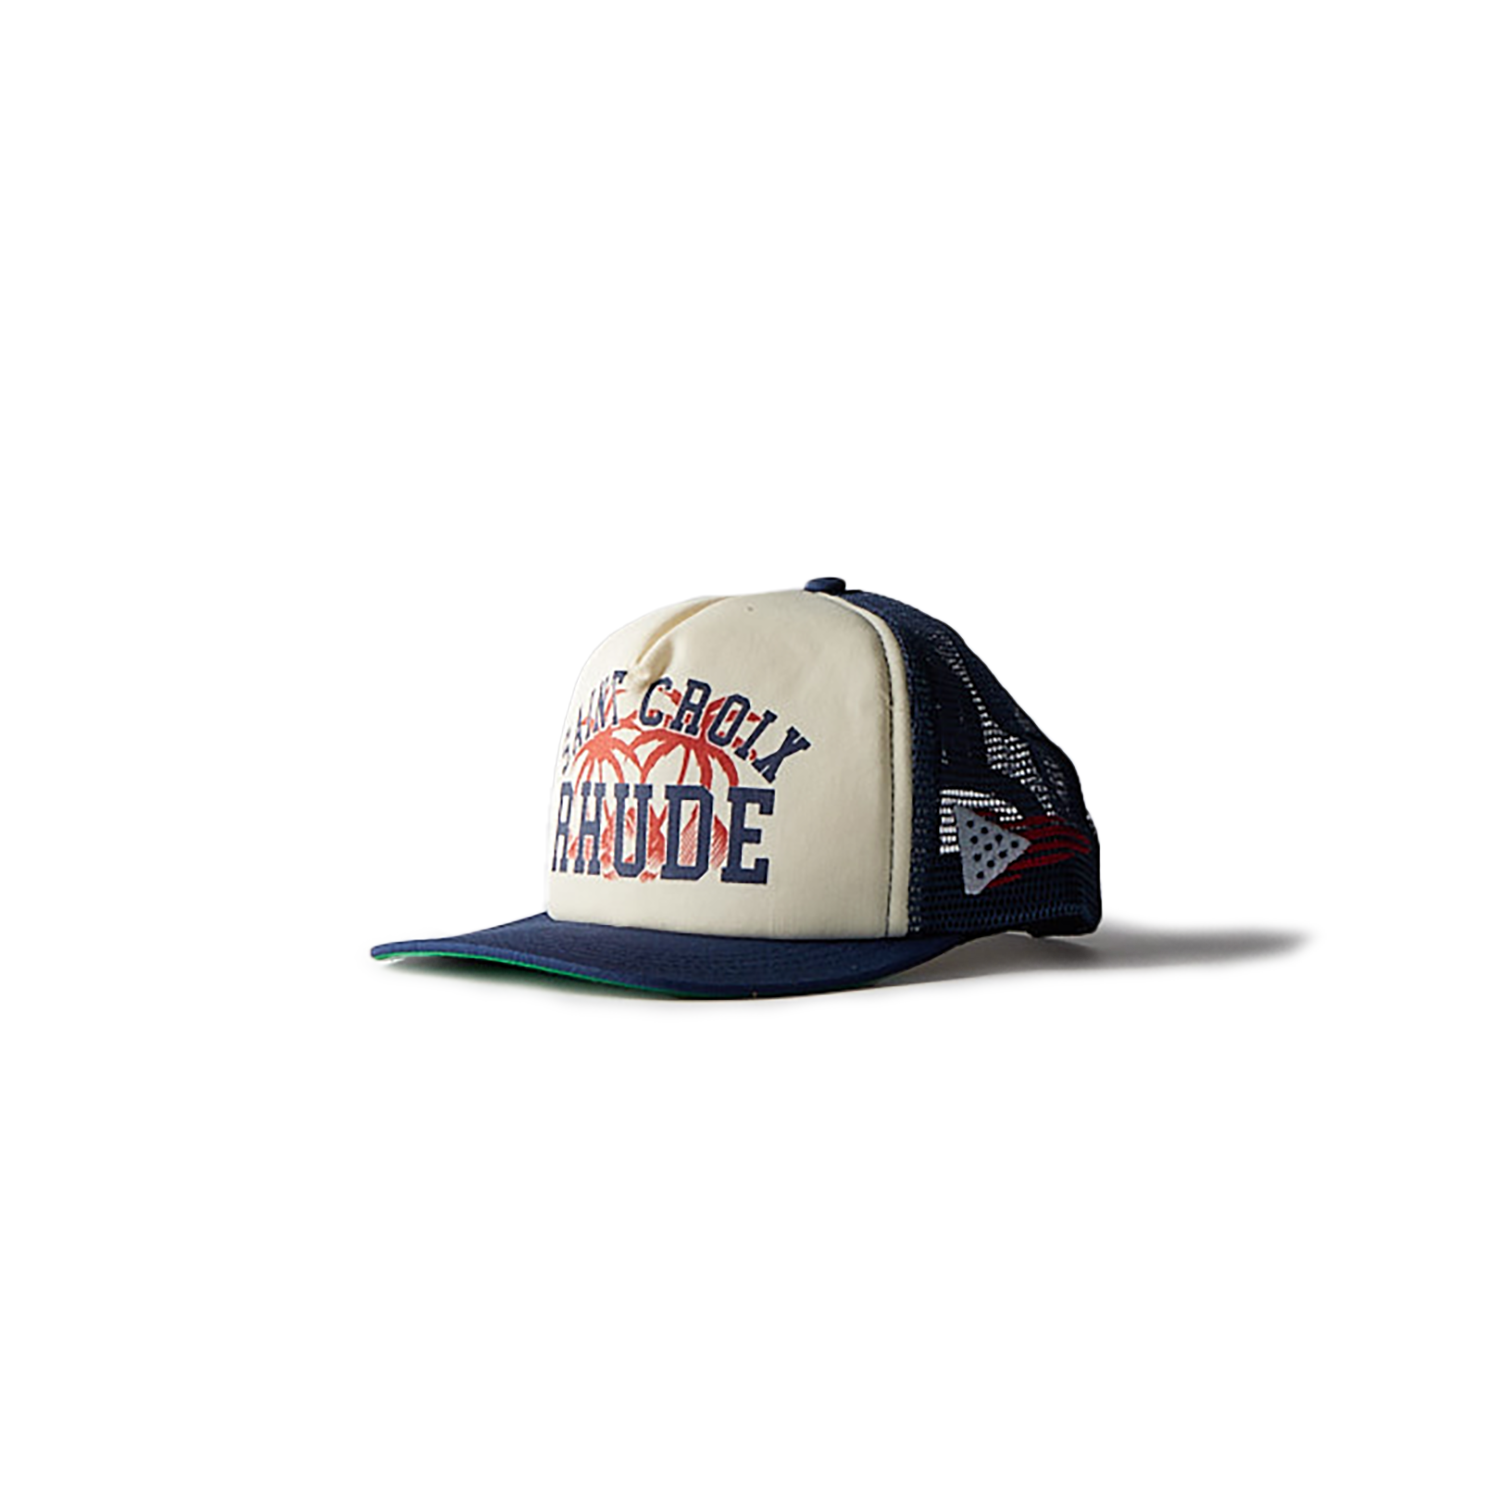 RHUDE - Saint Croix Trucker Hat product image